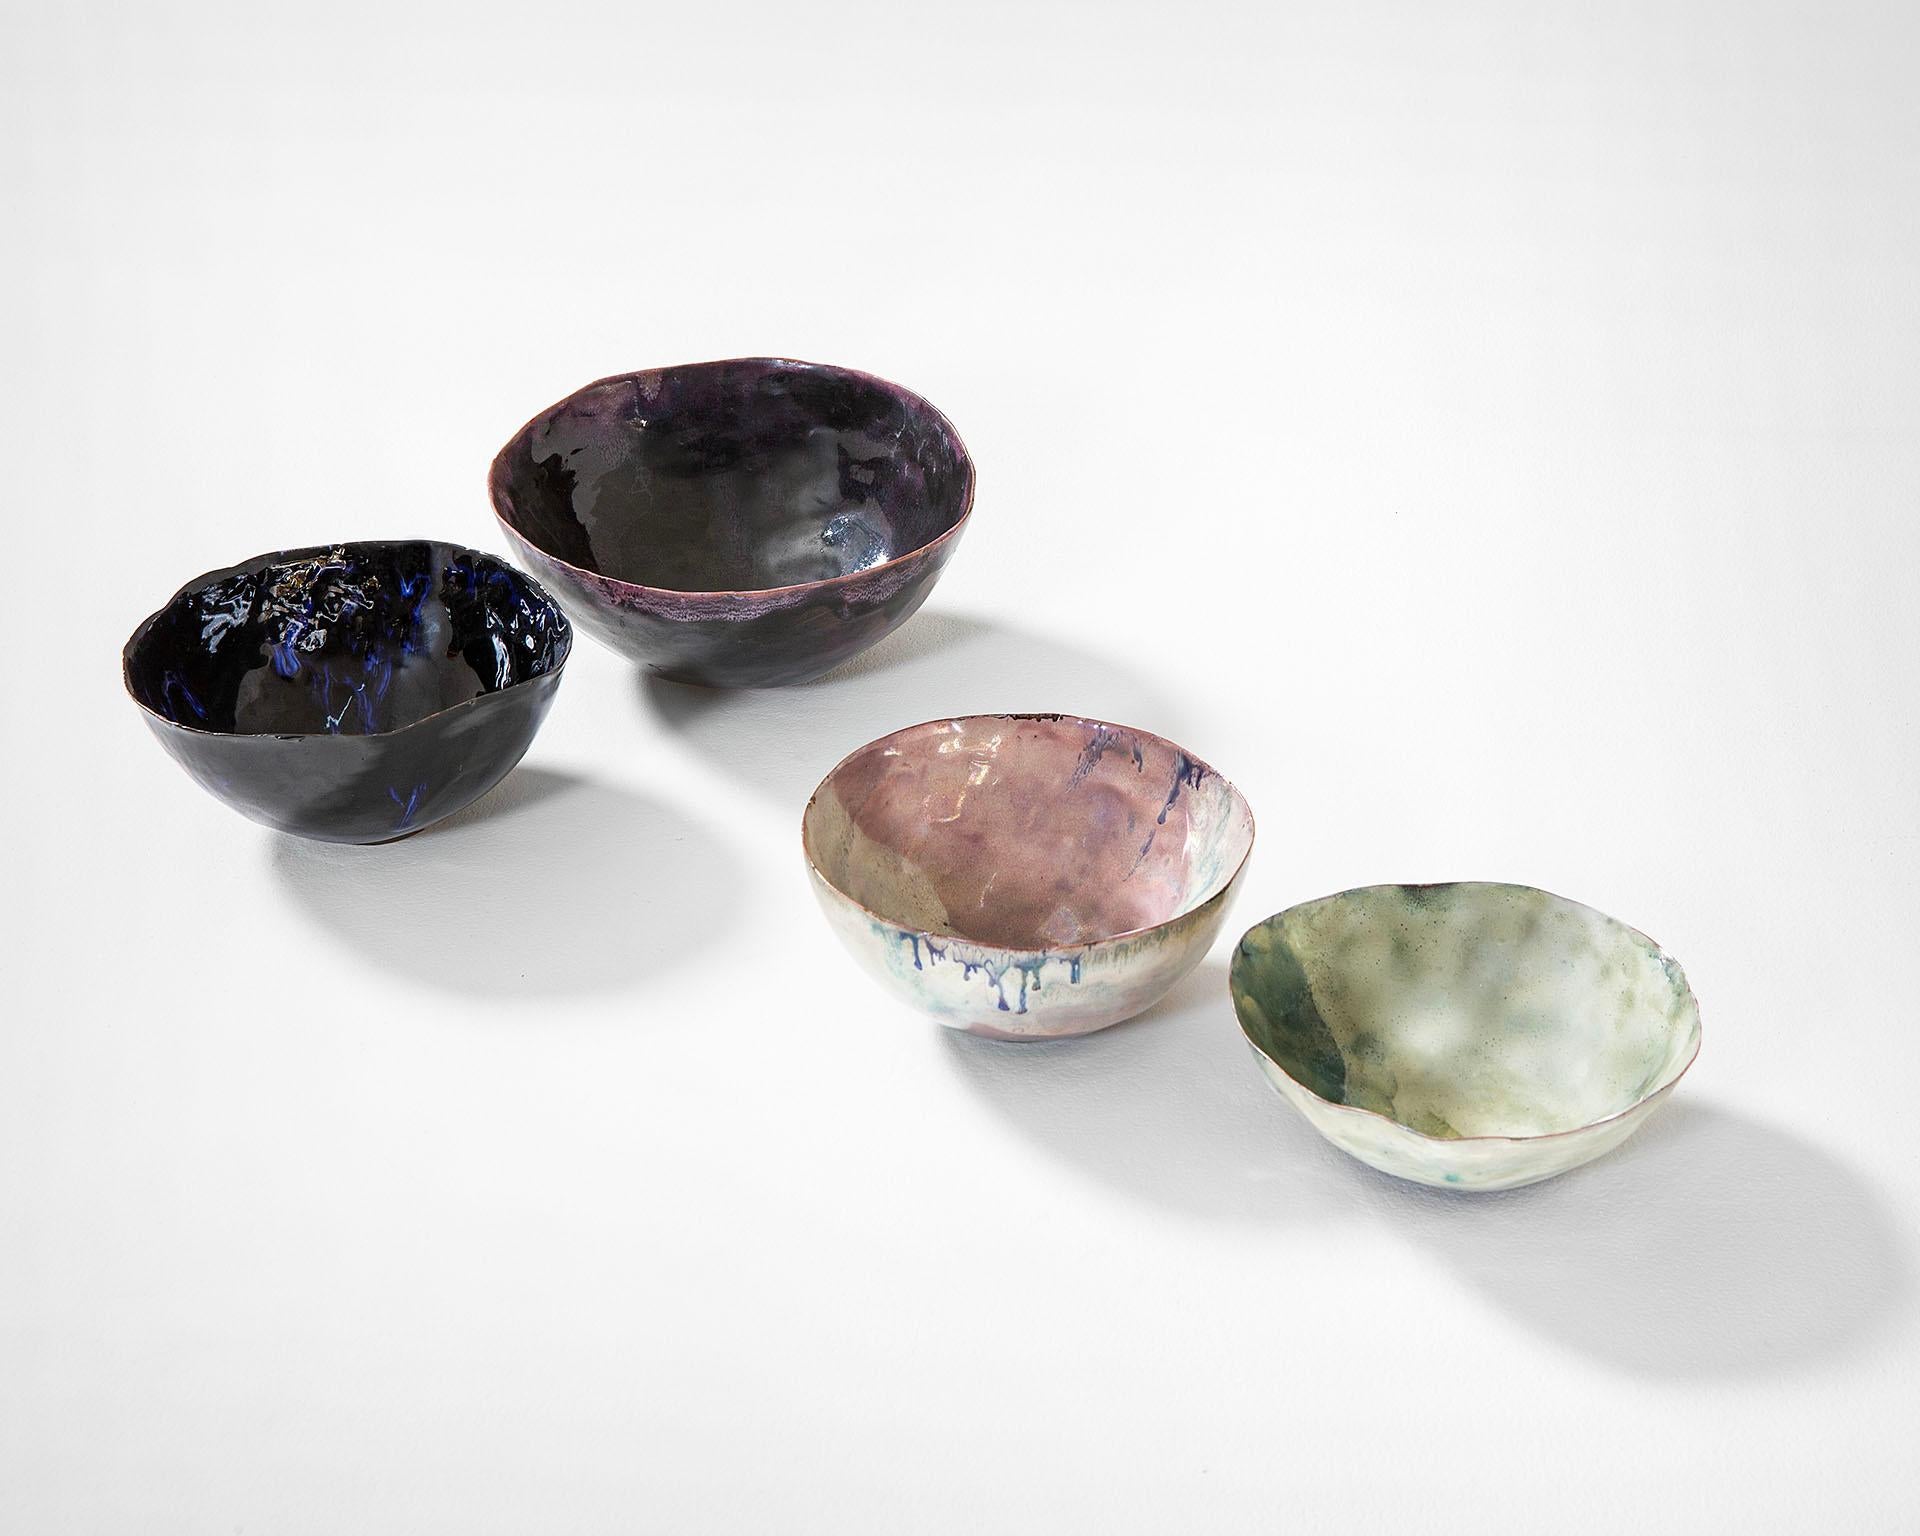 20th Century Fausto Melotti Decorative Bowl in Blue Enameled Ceramic, 60s For Sale 2